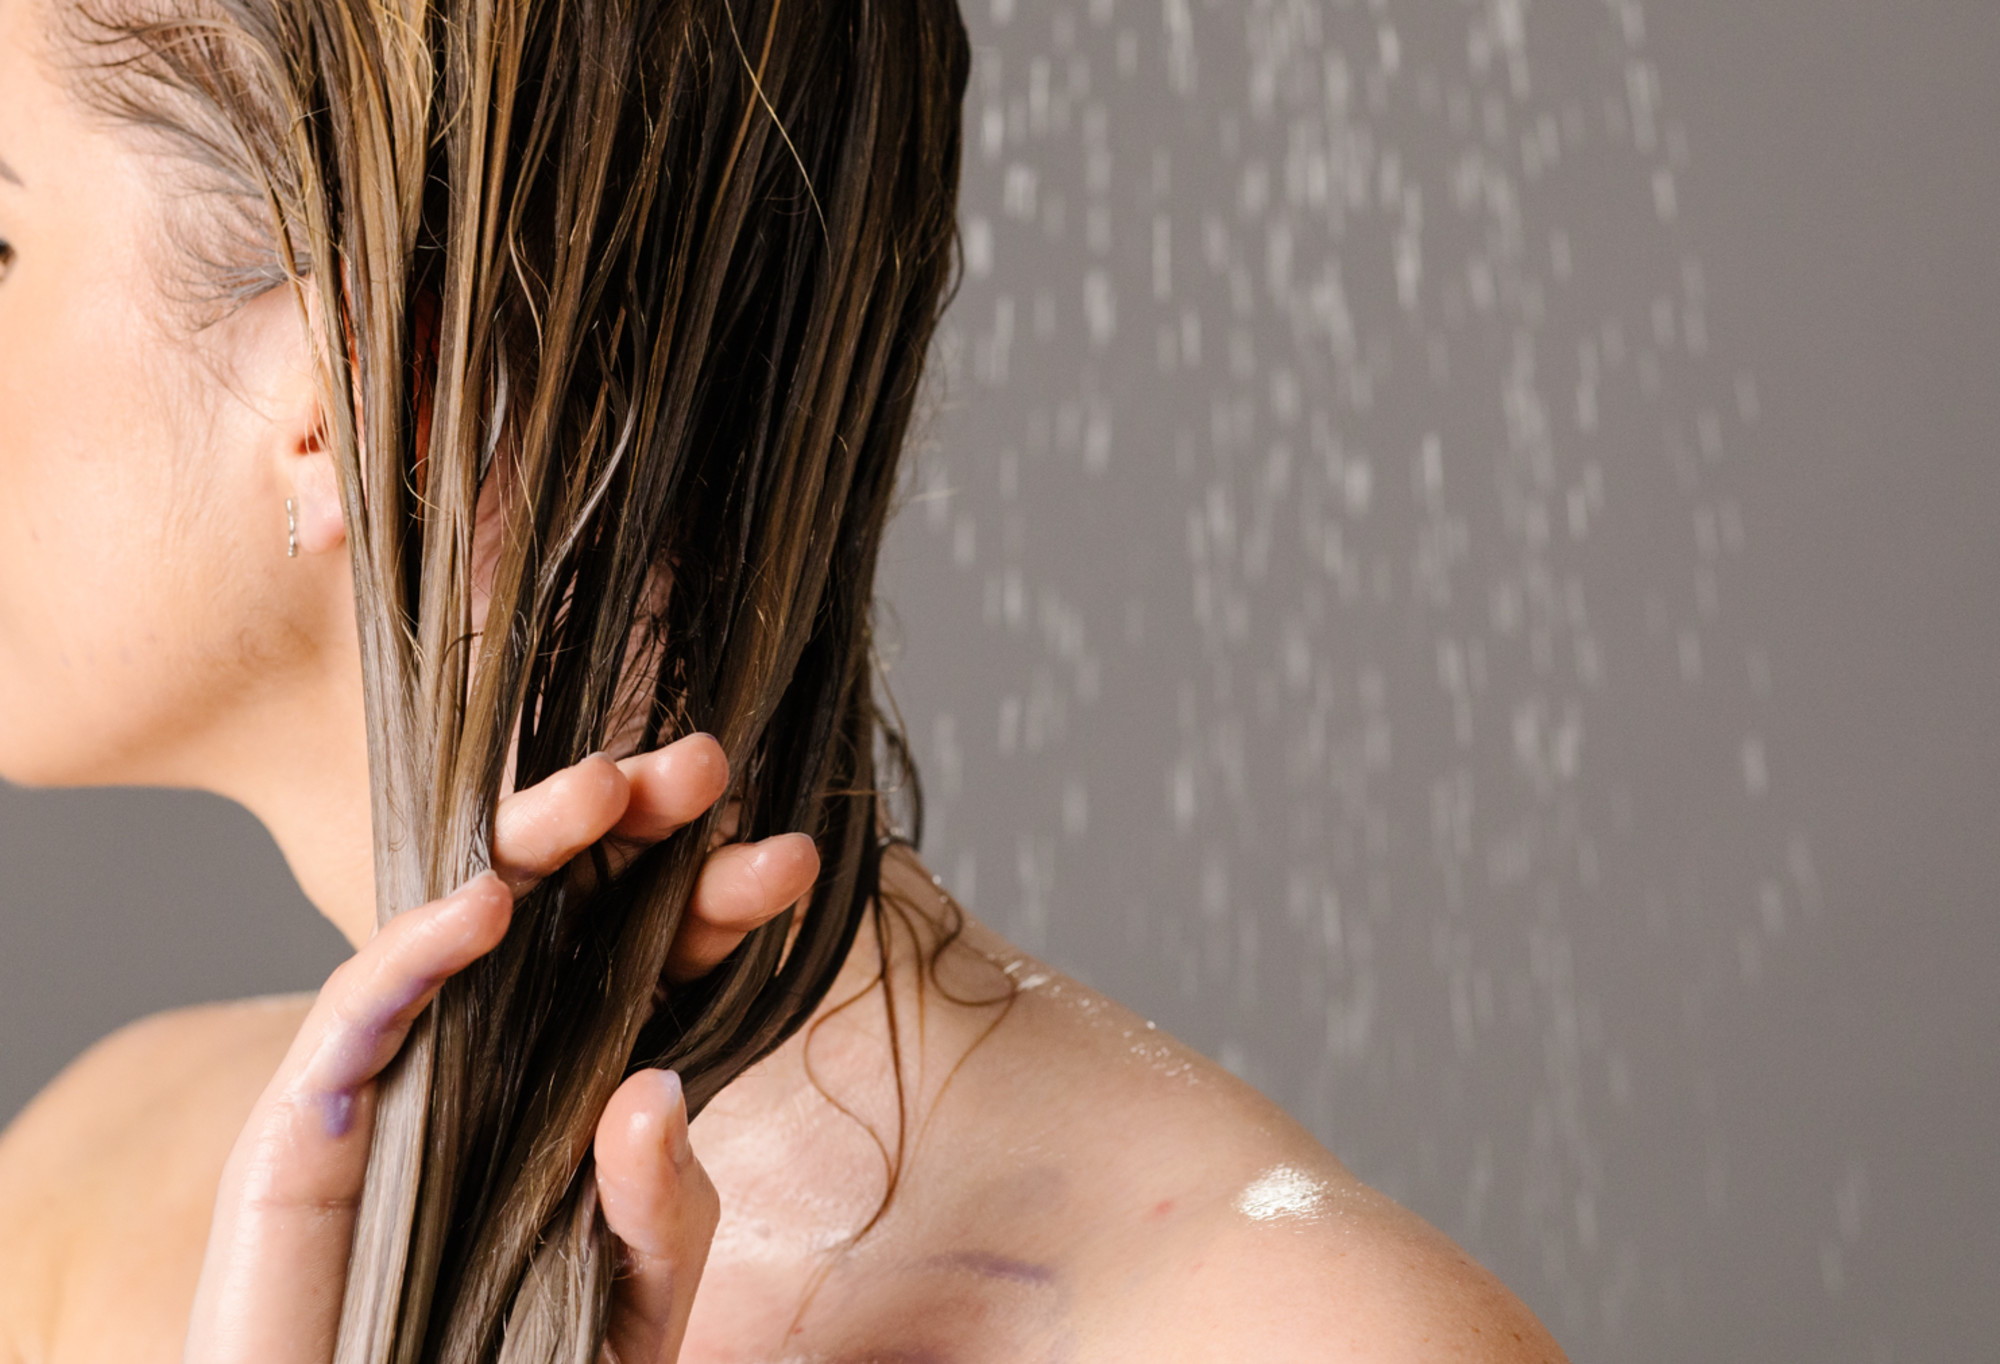 A person works their fingers through their long, wet, blonde hair while using Aga's lilac hair conditioner.